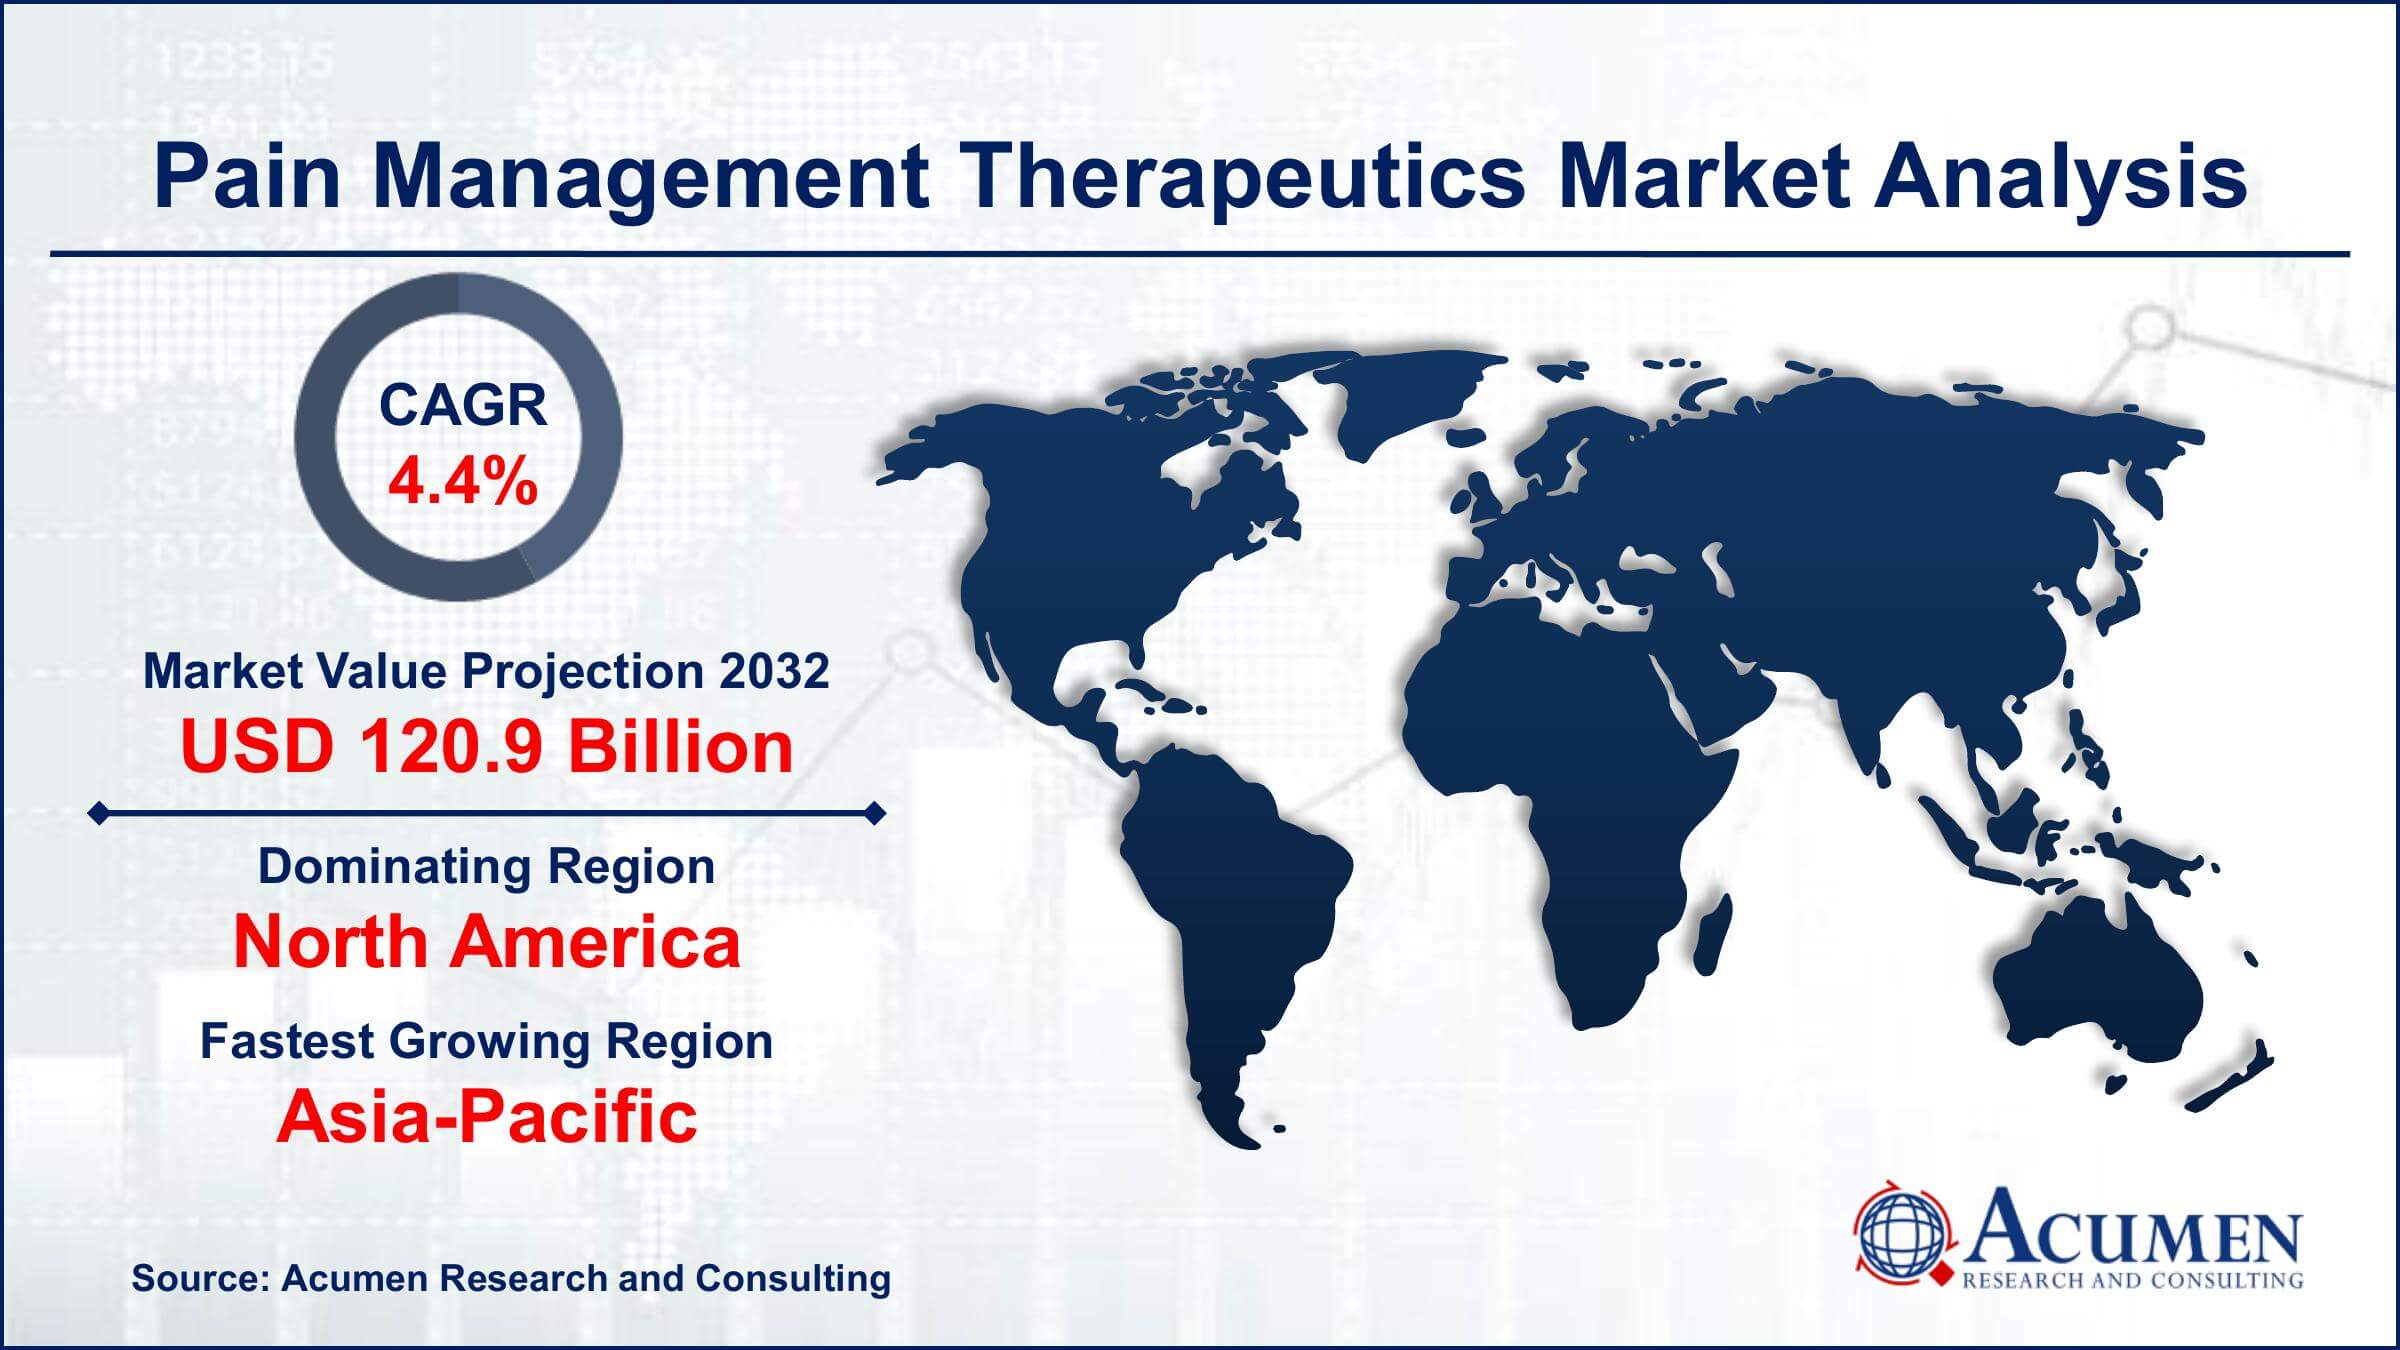 Global Pain Management Therapeutics Market Trends